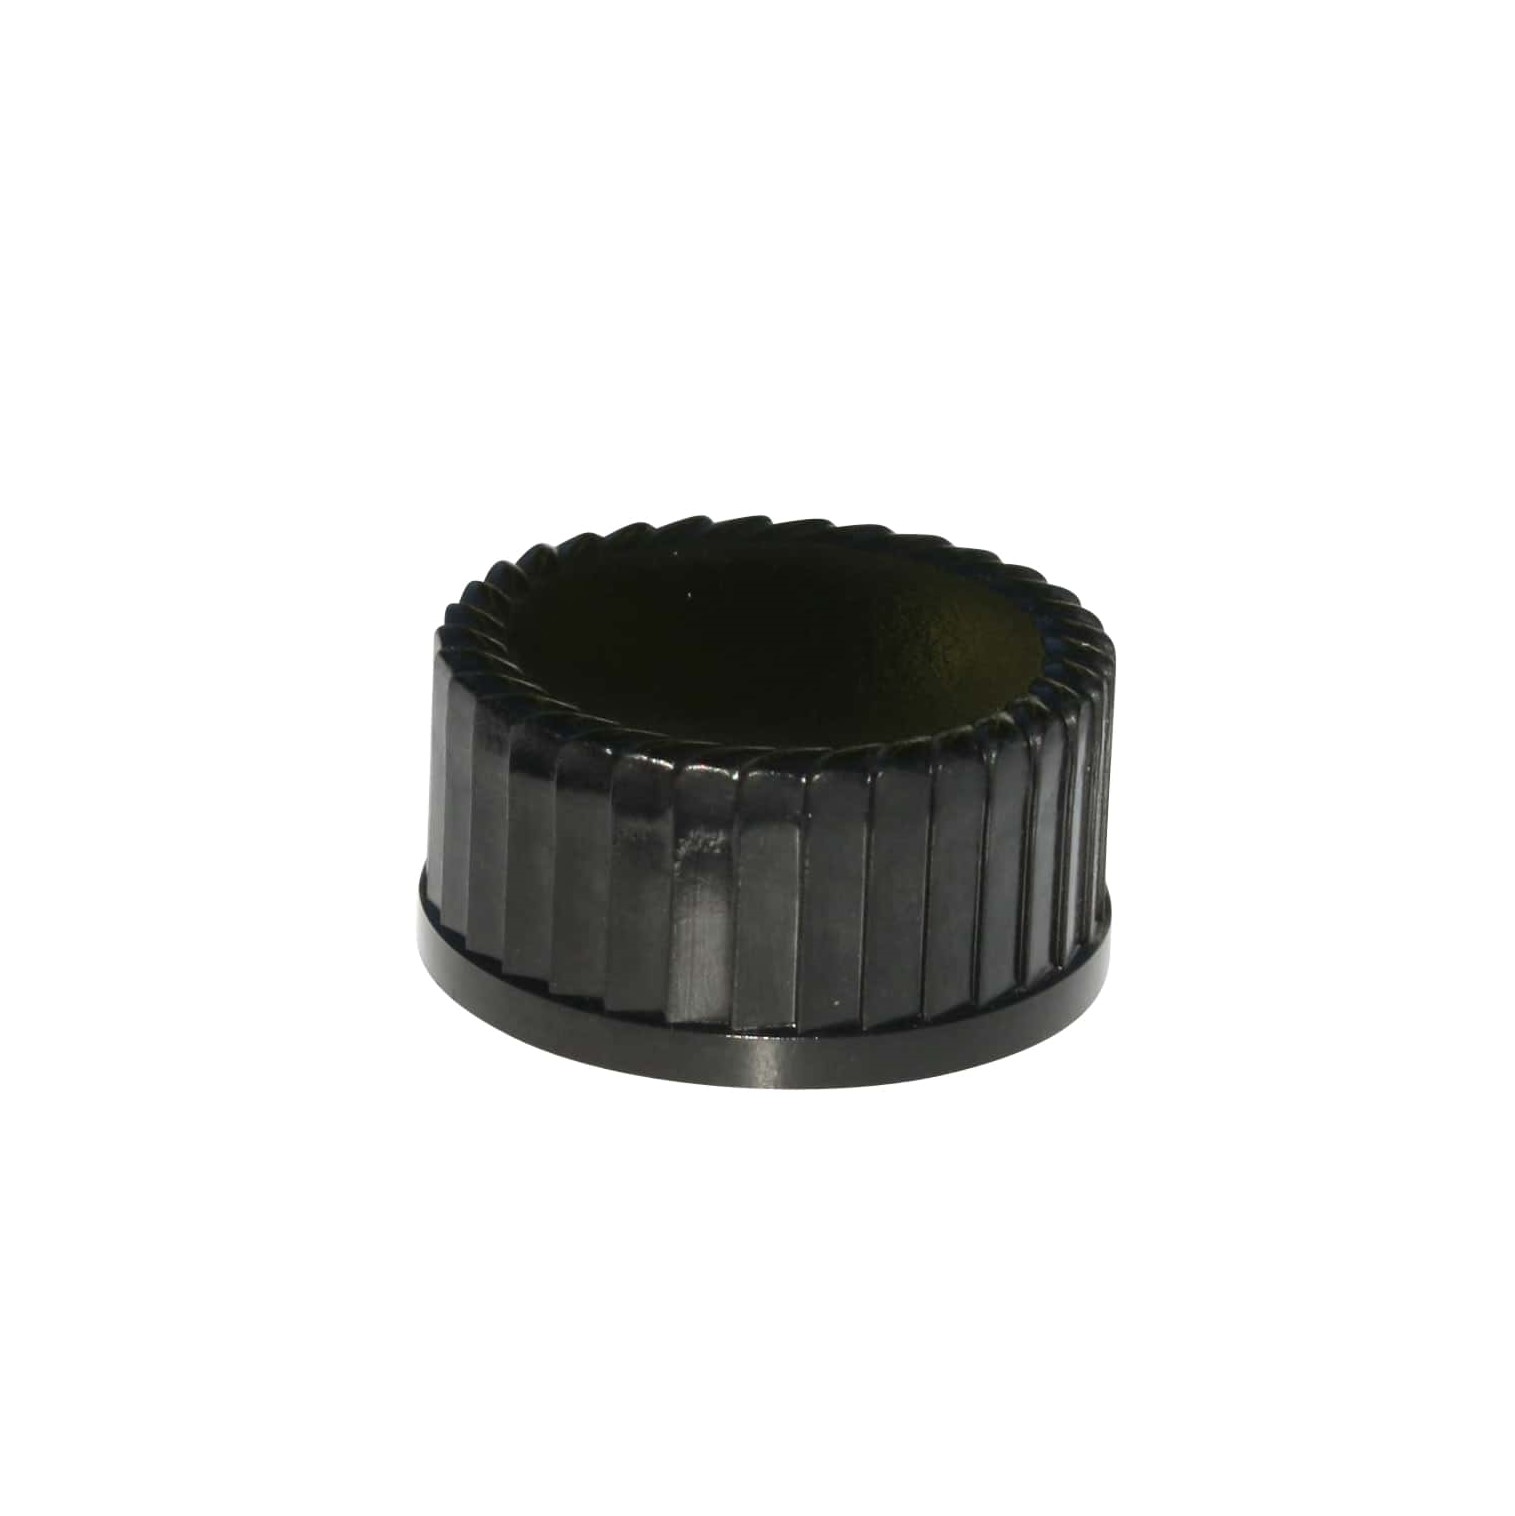 Screw cap, HPM plastic, black, for opening: DIN 25